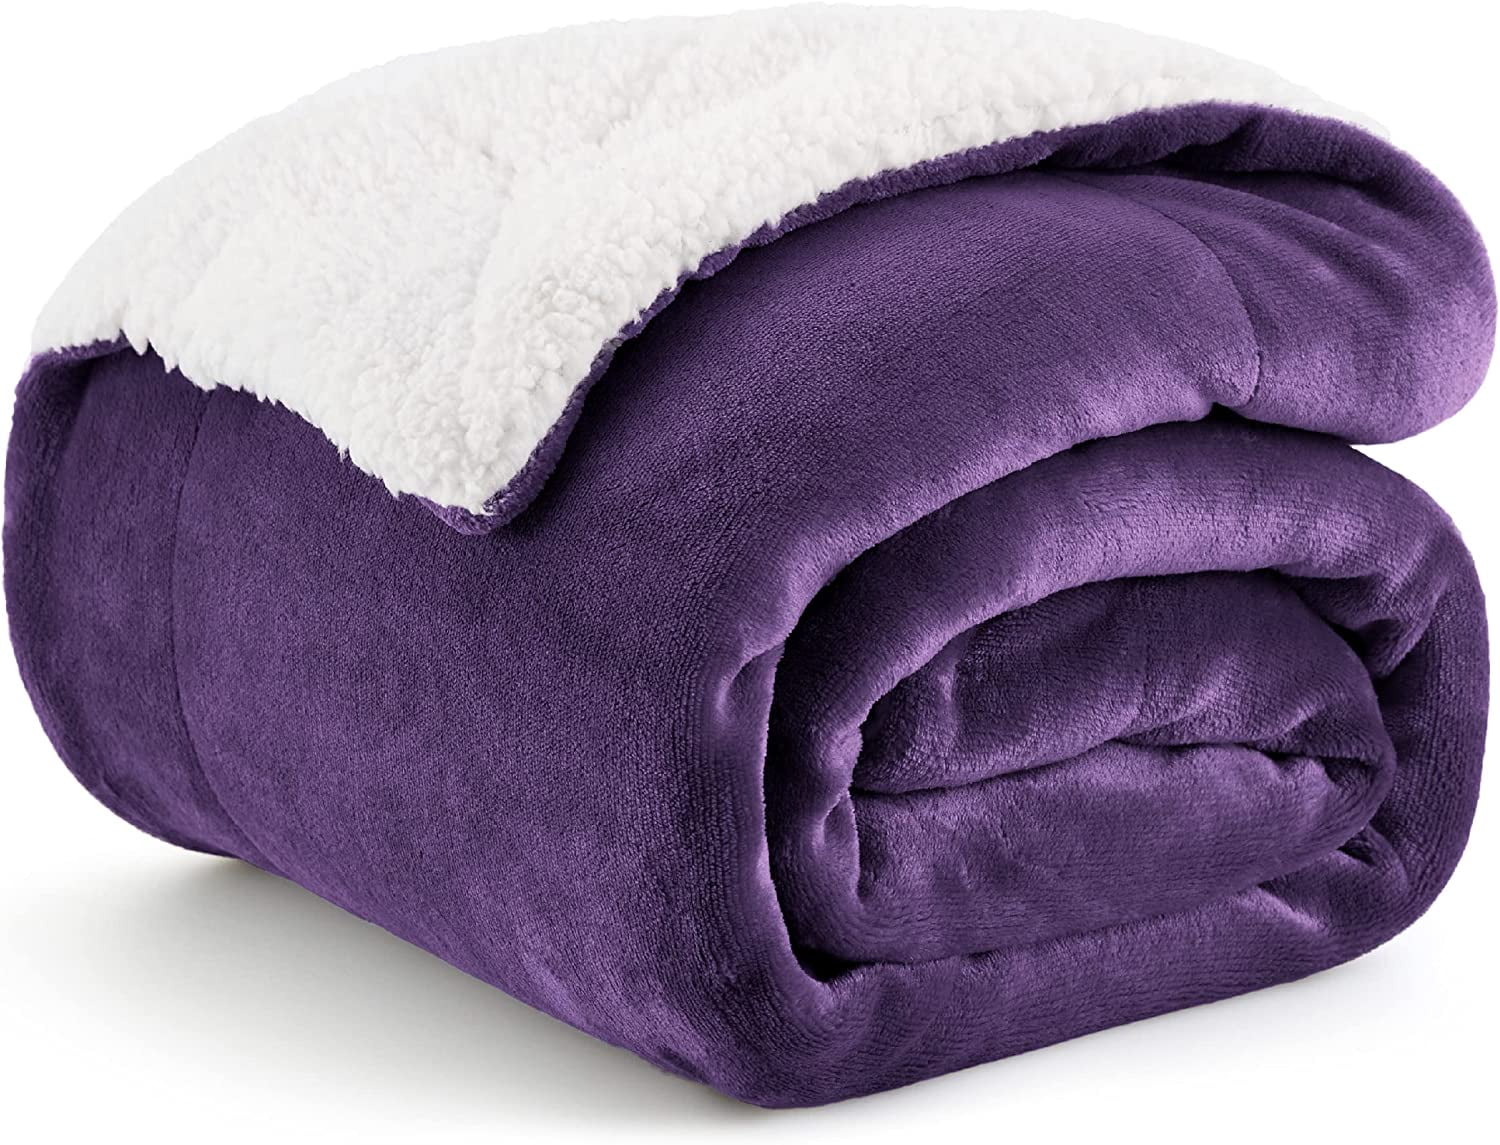 Bedsure Sherpa Fleece Throw Blanket Twin Size Charcoal - Thick